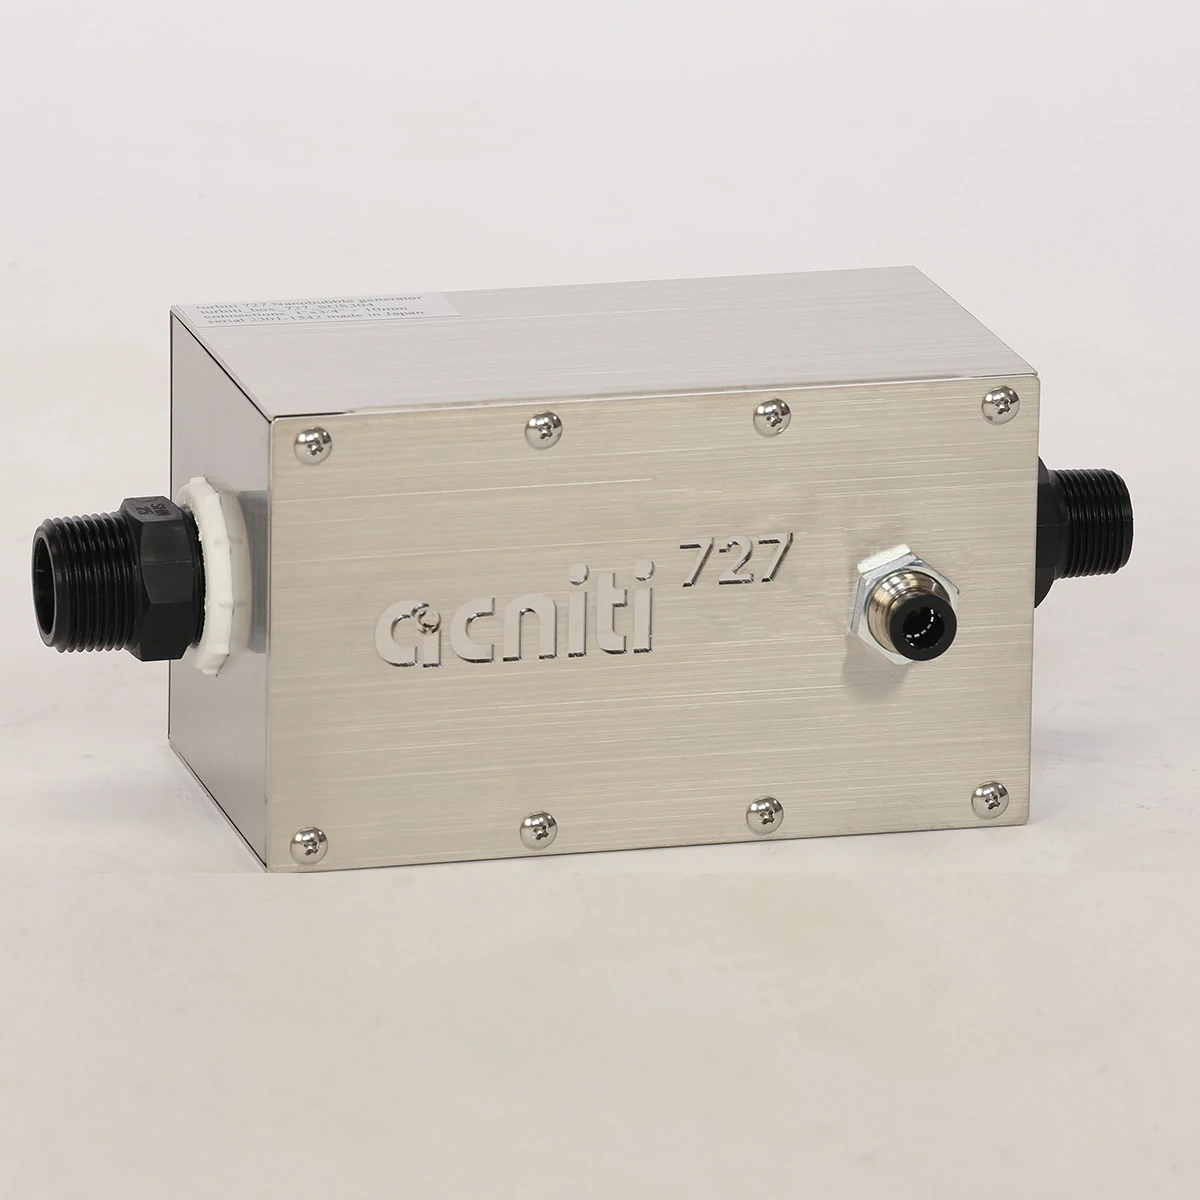 acniti nanobubble nanobubble mixer 727 in a SUS 304 box with one-way valve